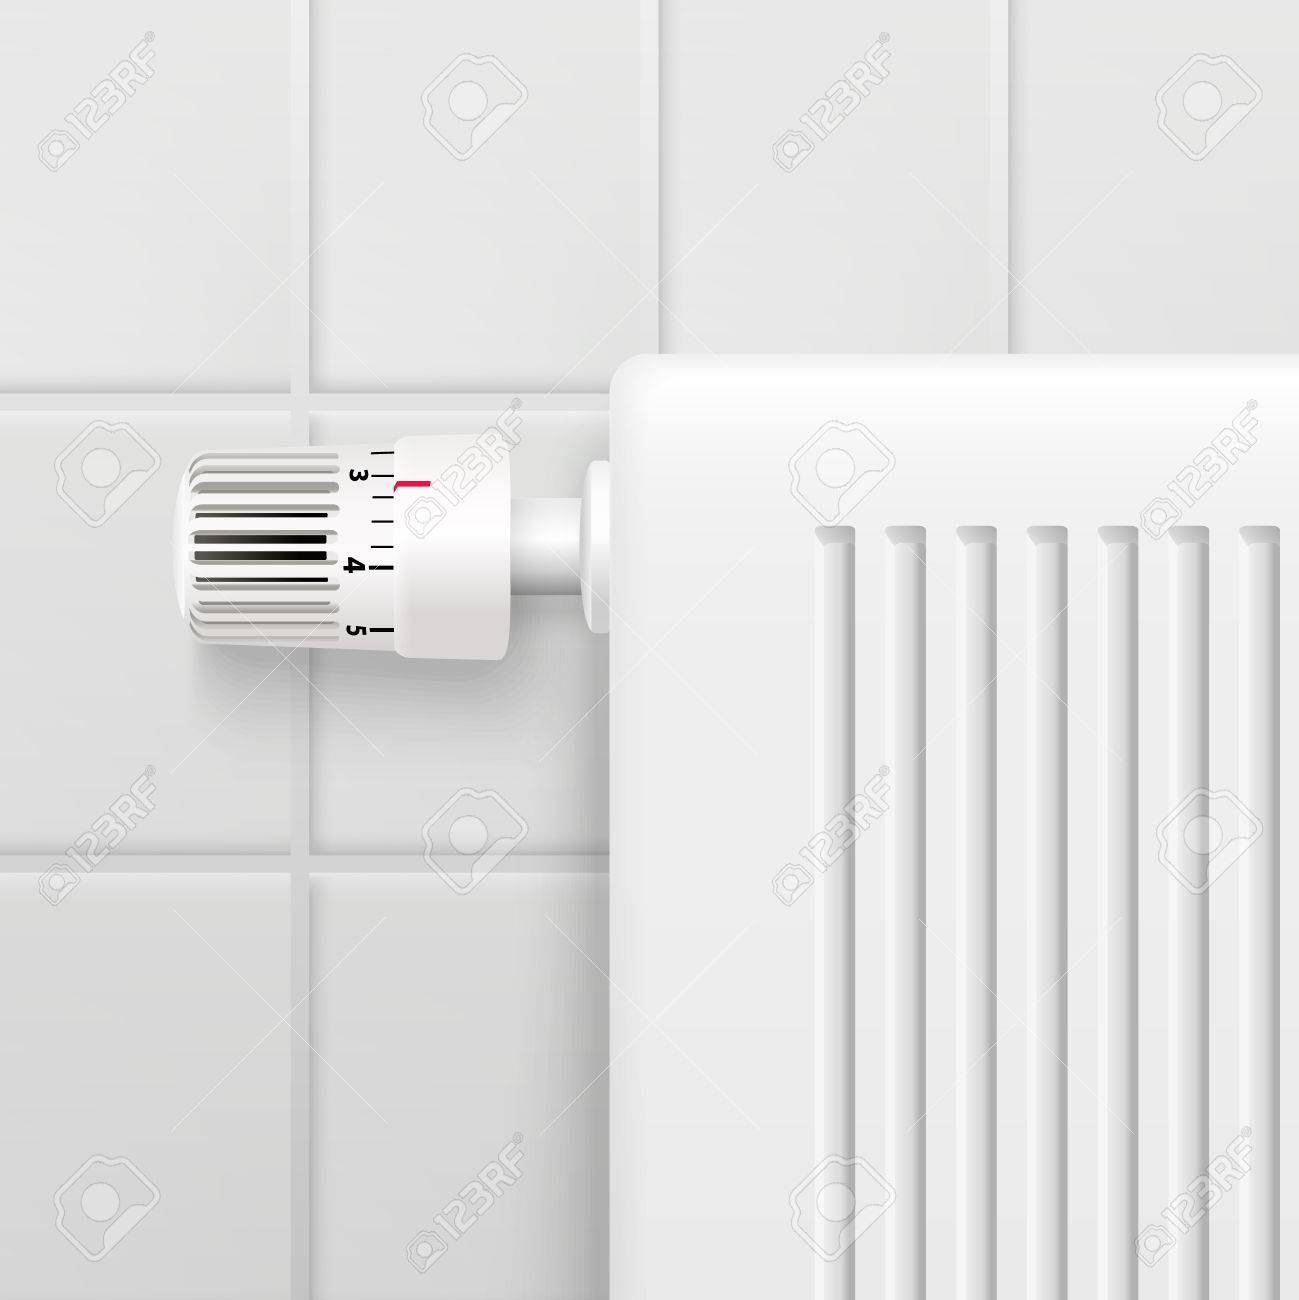 Hot Water Heating Radiator Temperature Control Knob Closeup